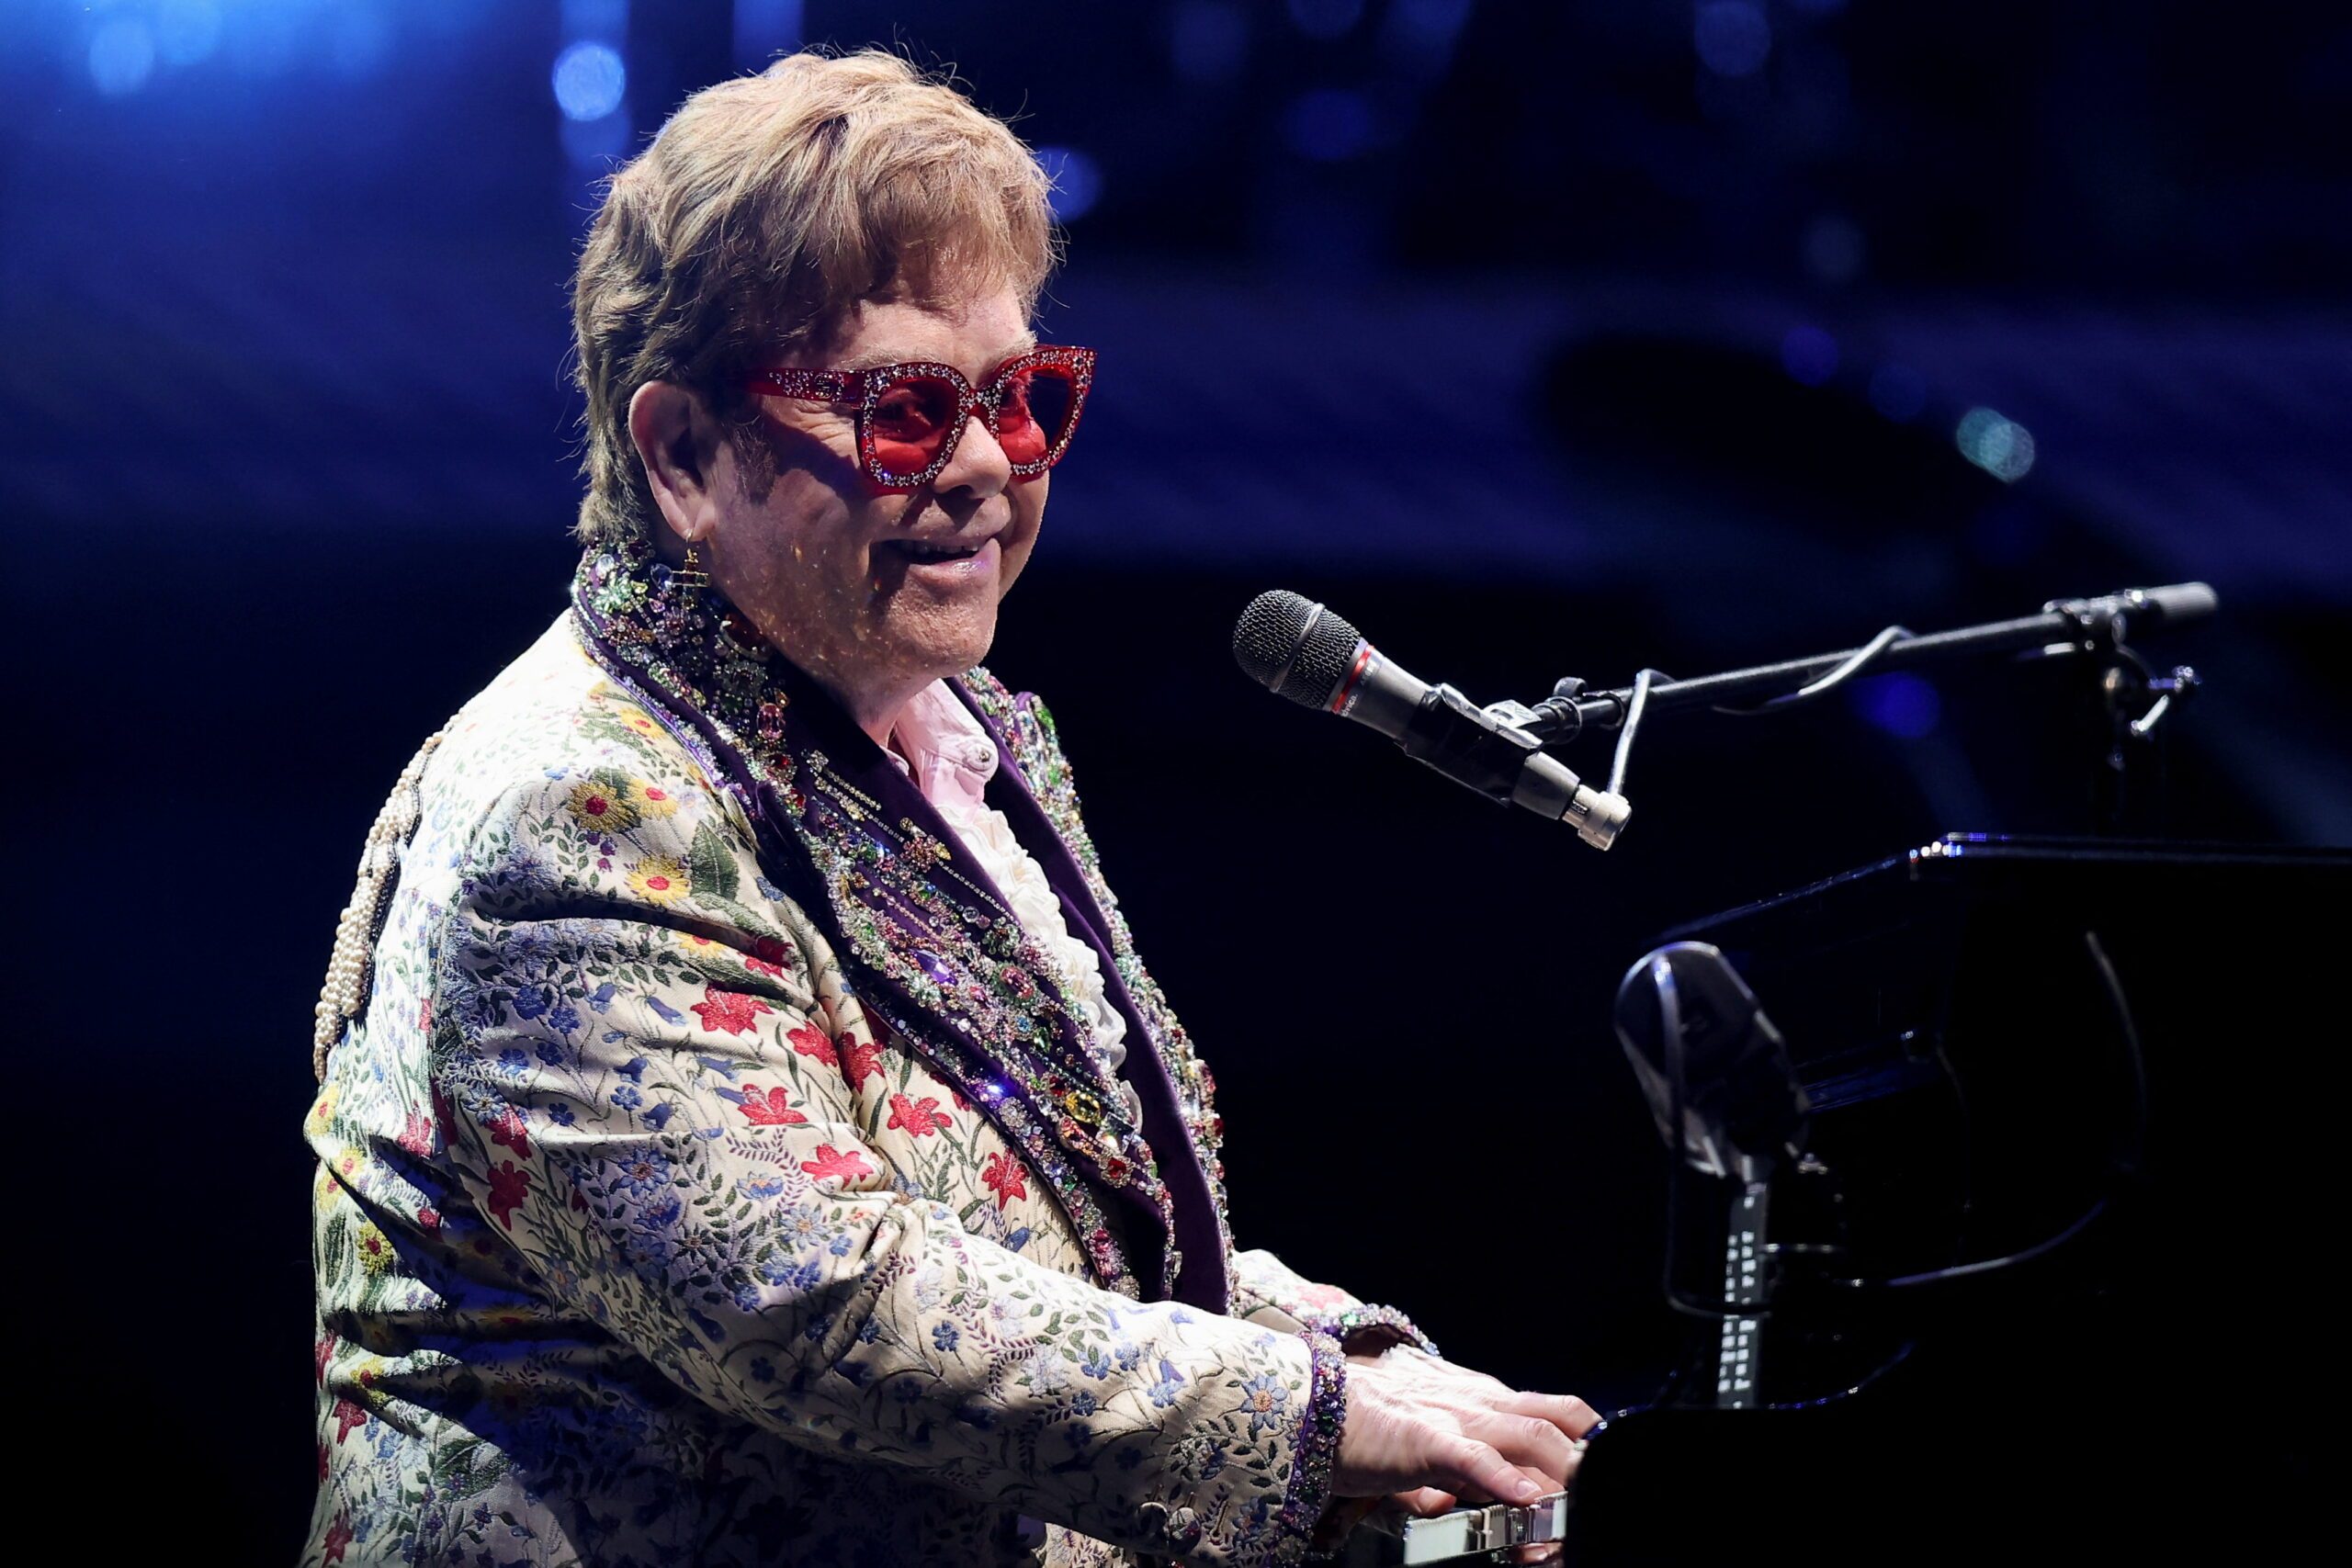 Elton John has COVID-19, postpones US tour dates